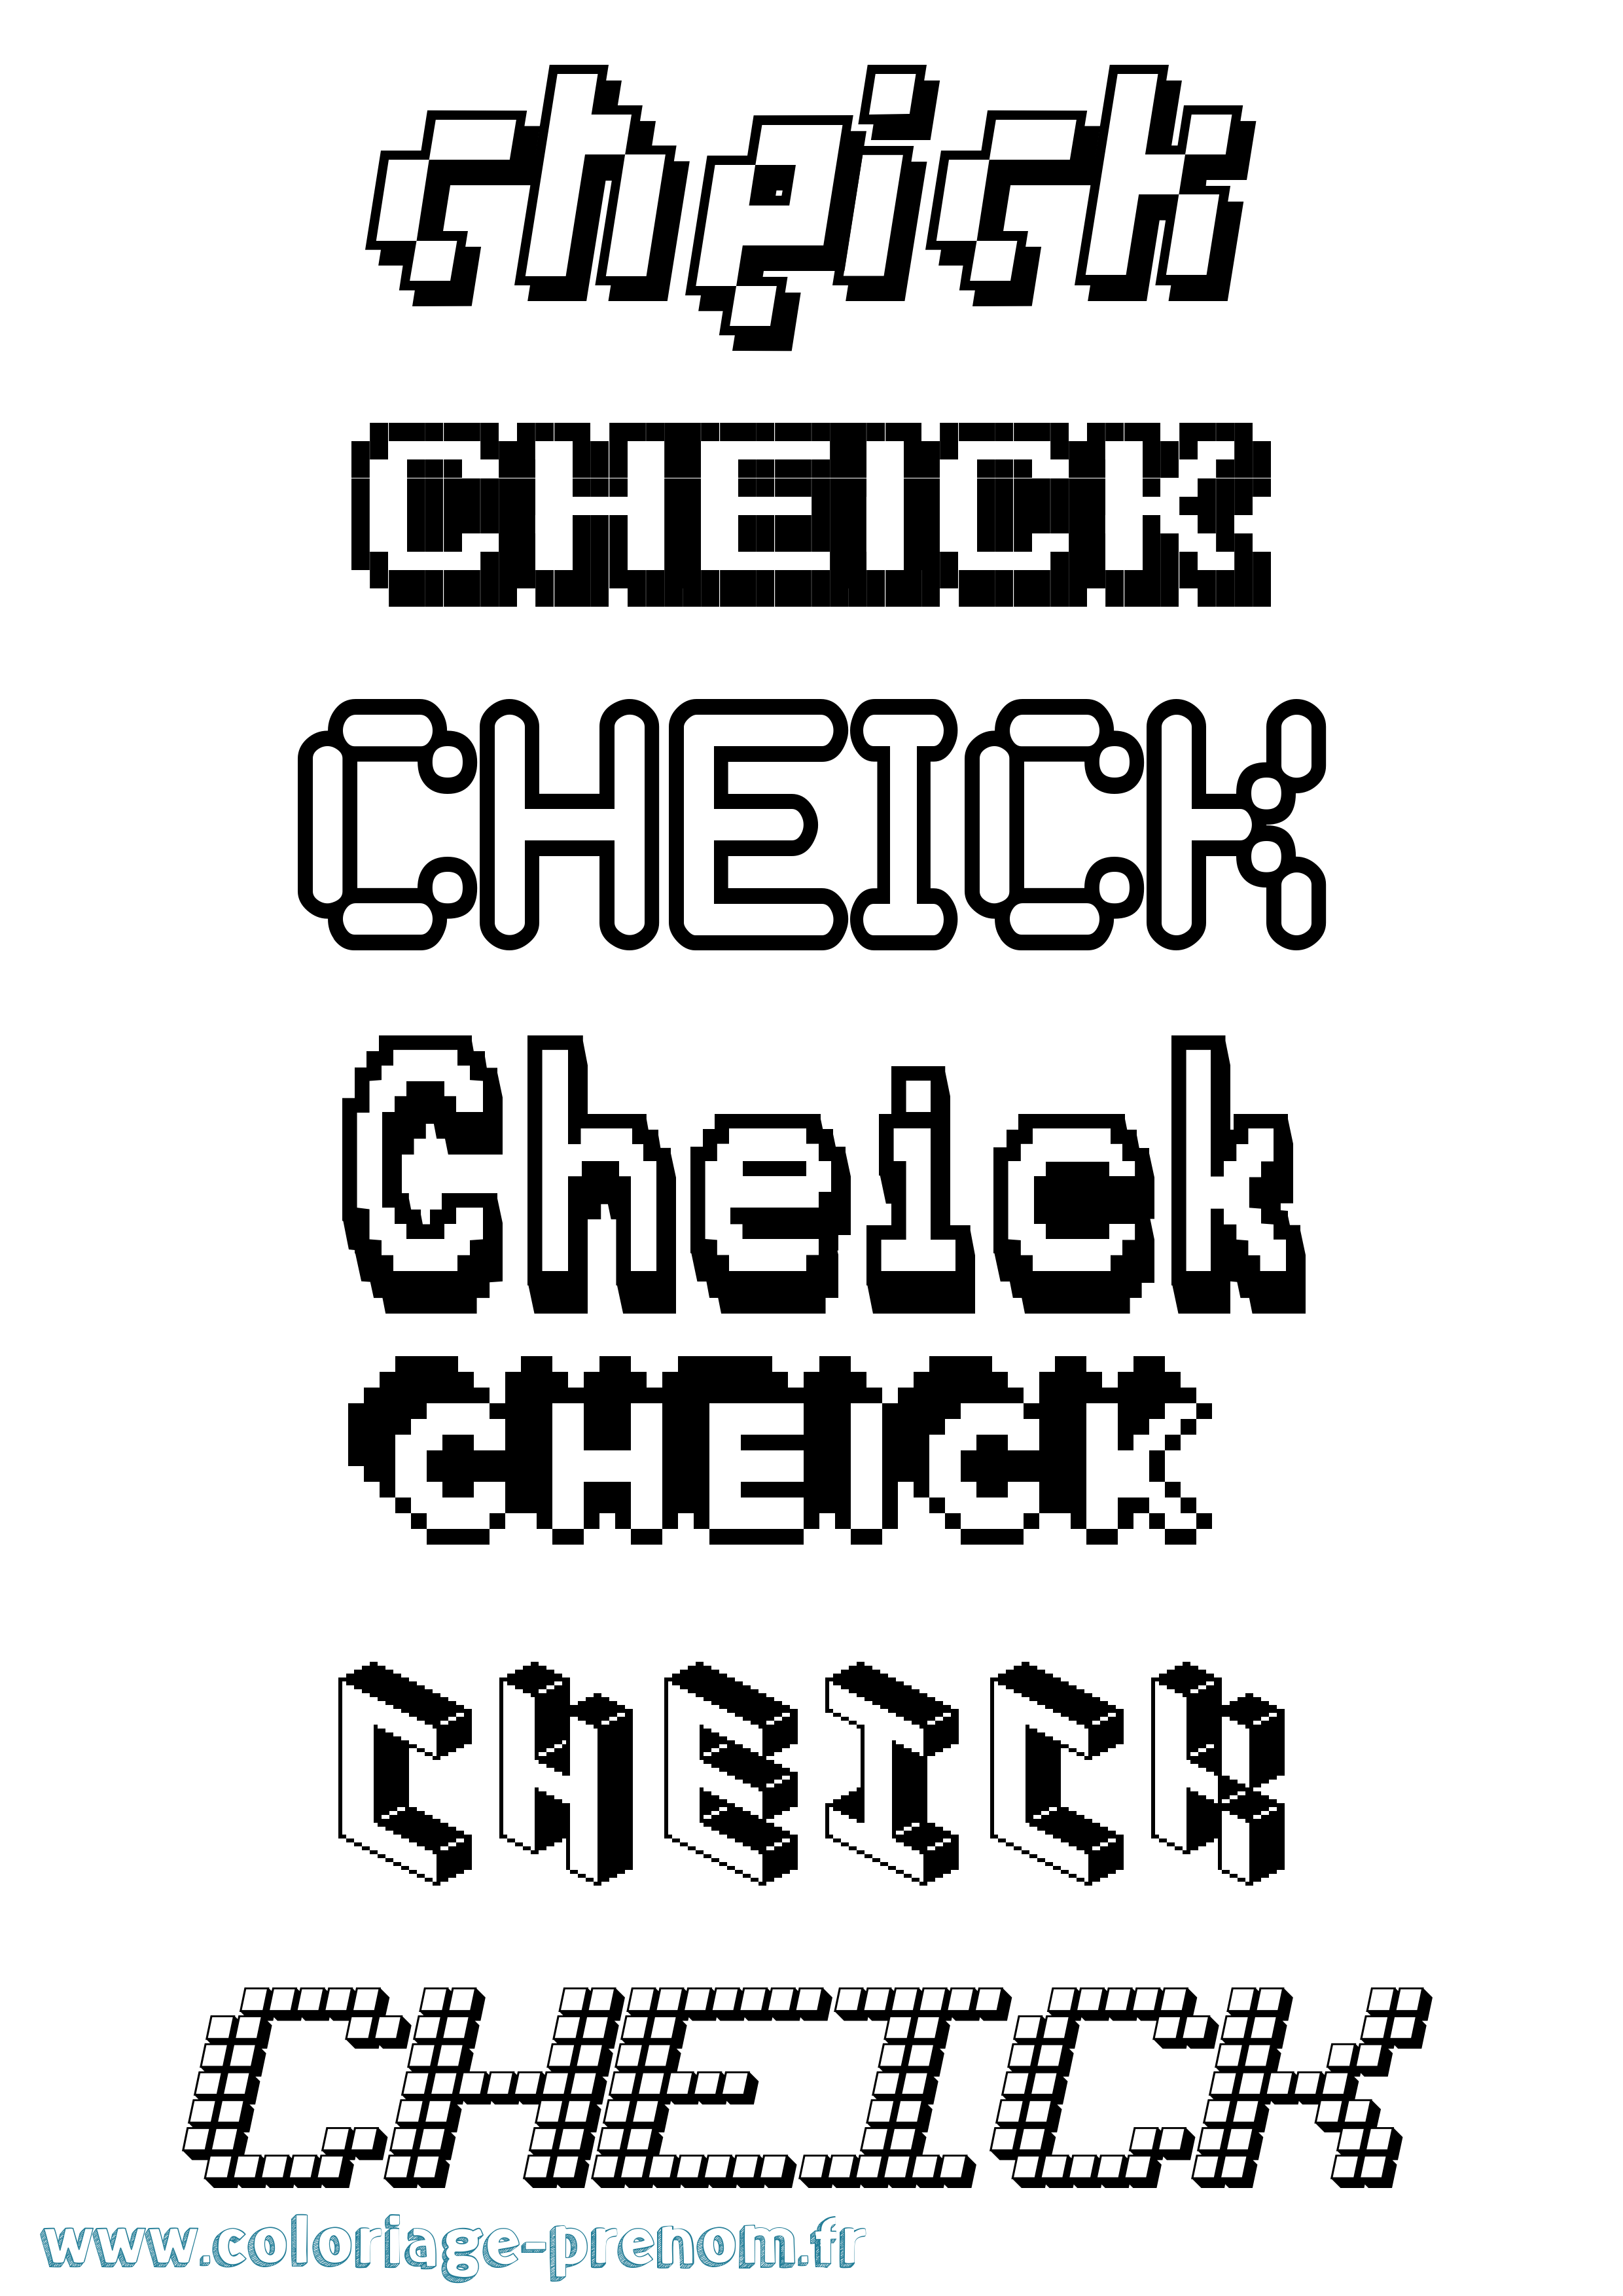 Coloriage prénom Cheick Pixel